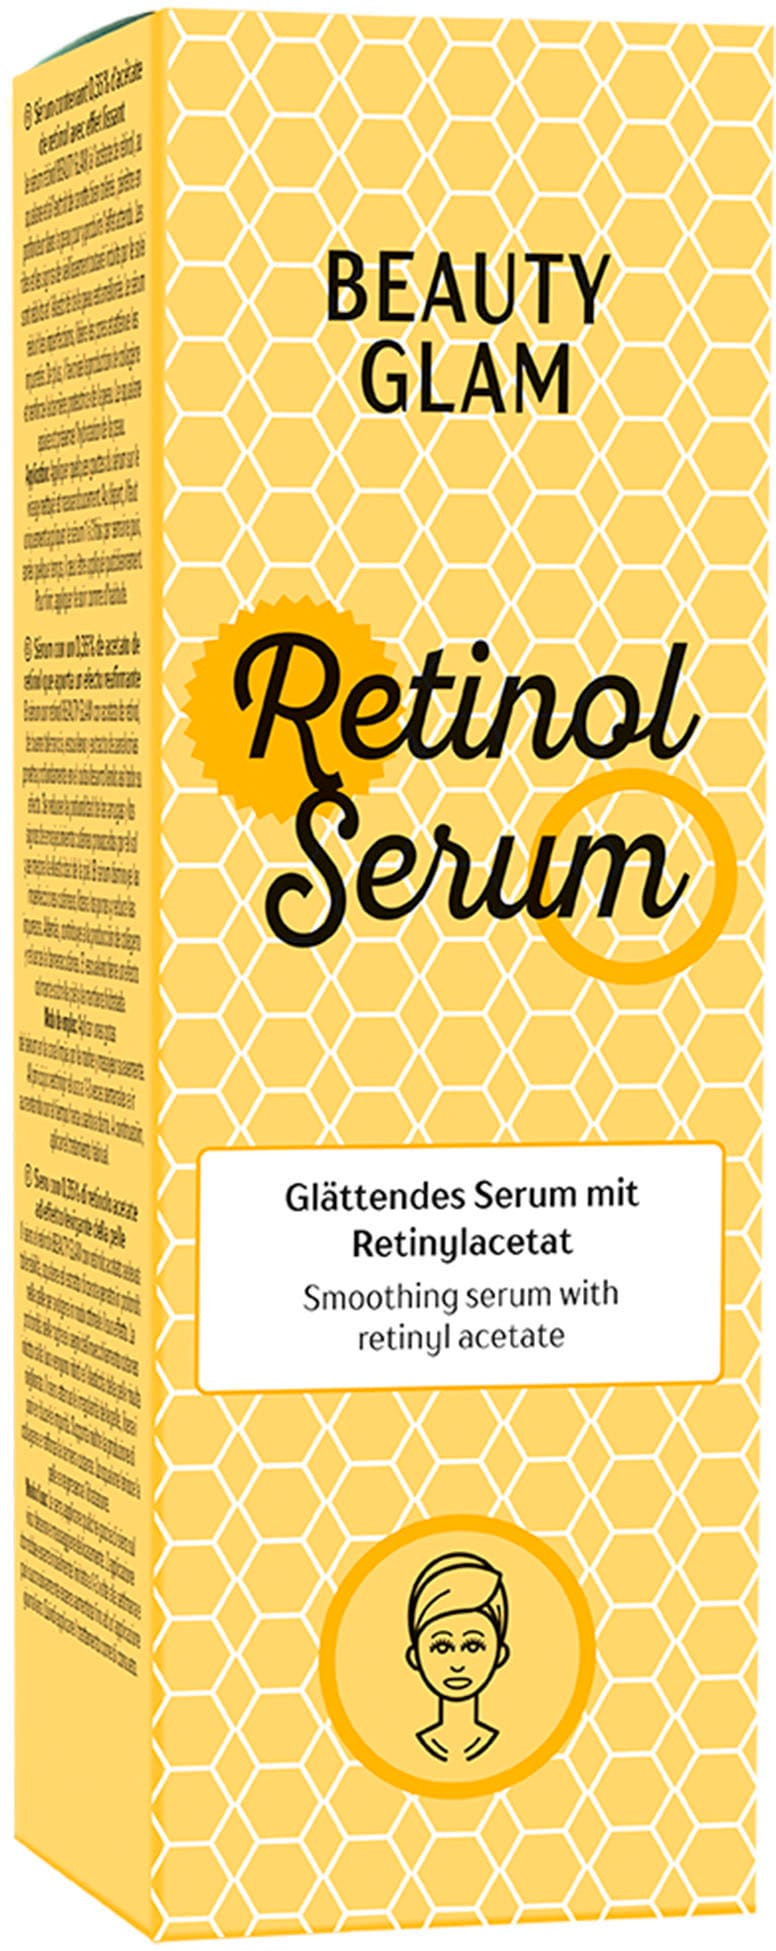 BEAUTY GLAM Gesichtsserum »Retinol Serum«